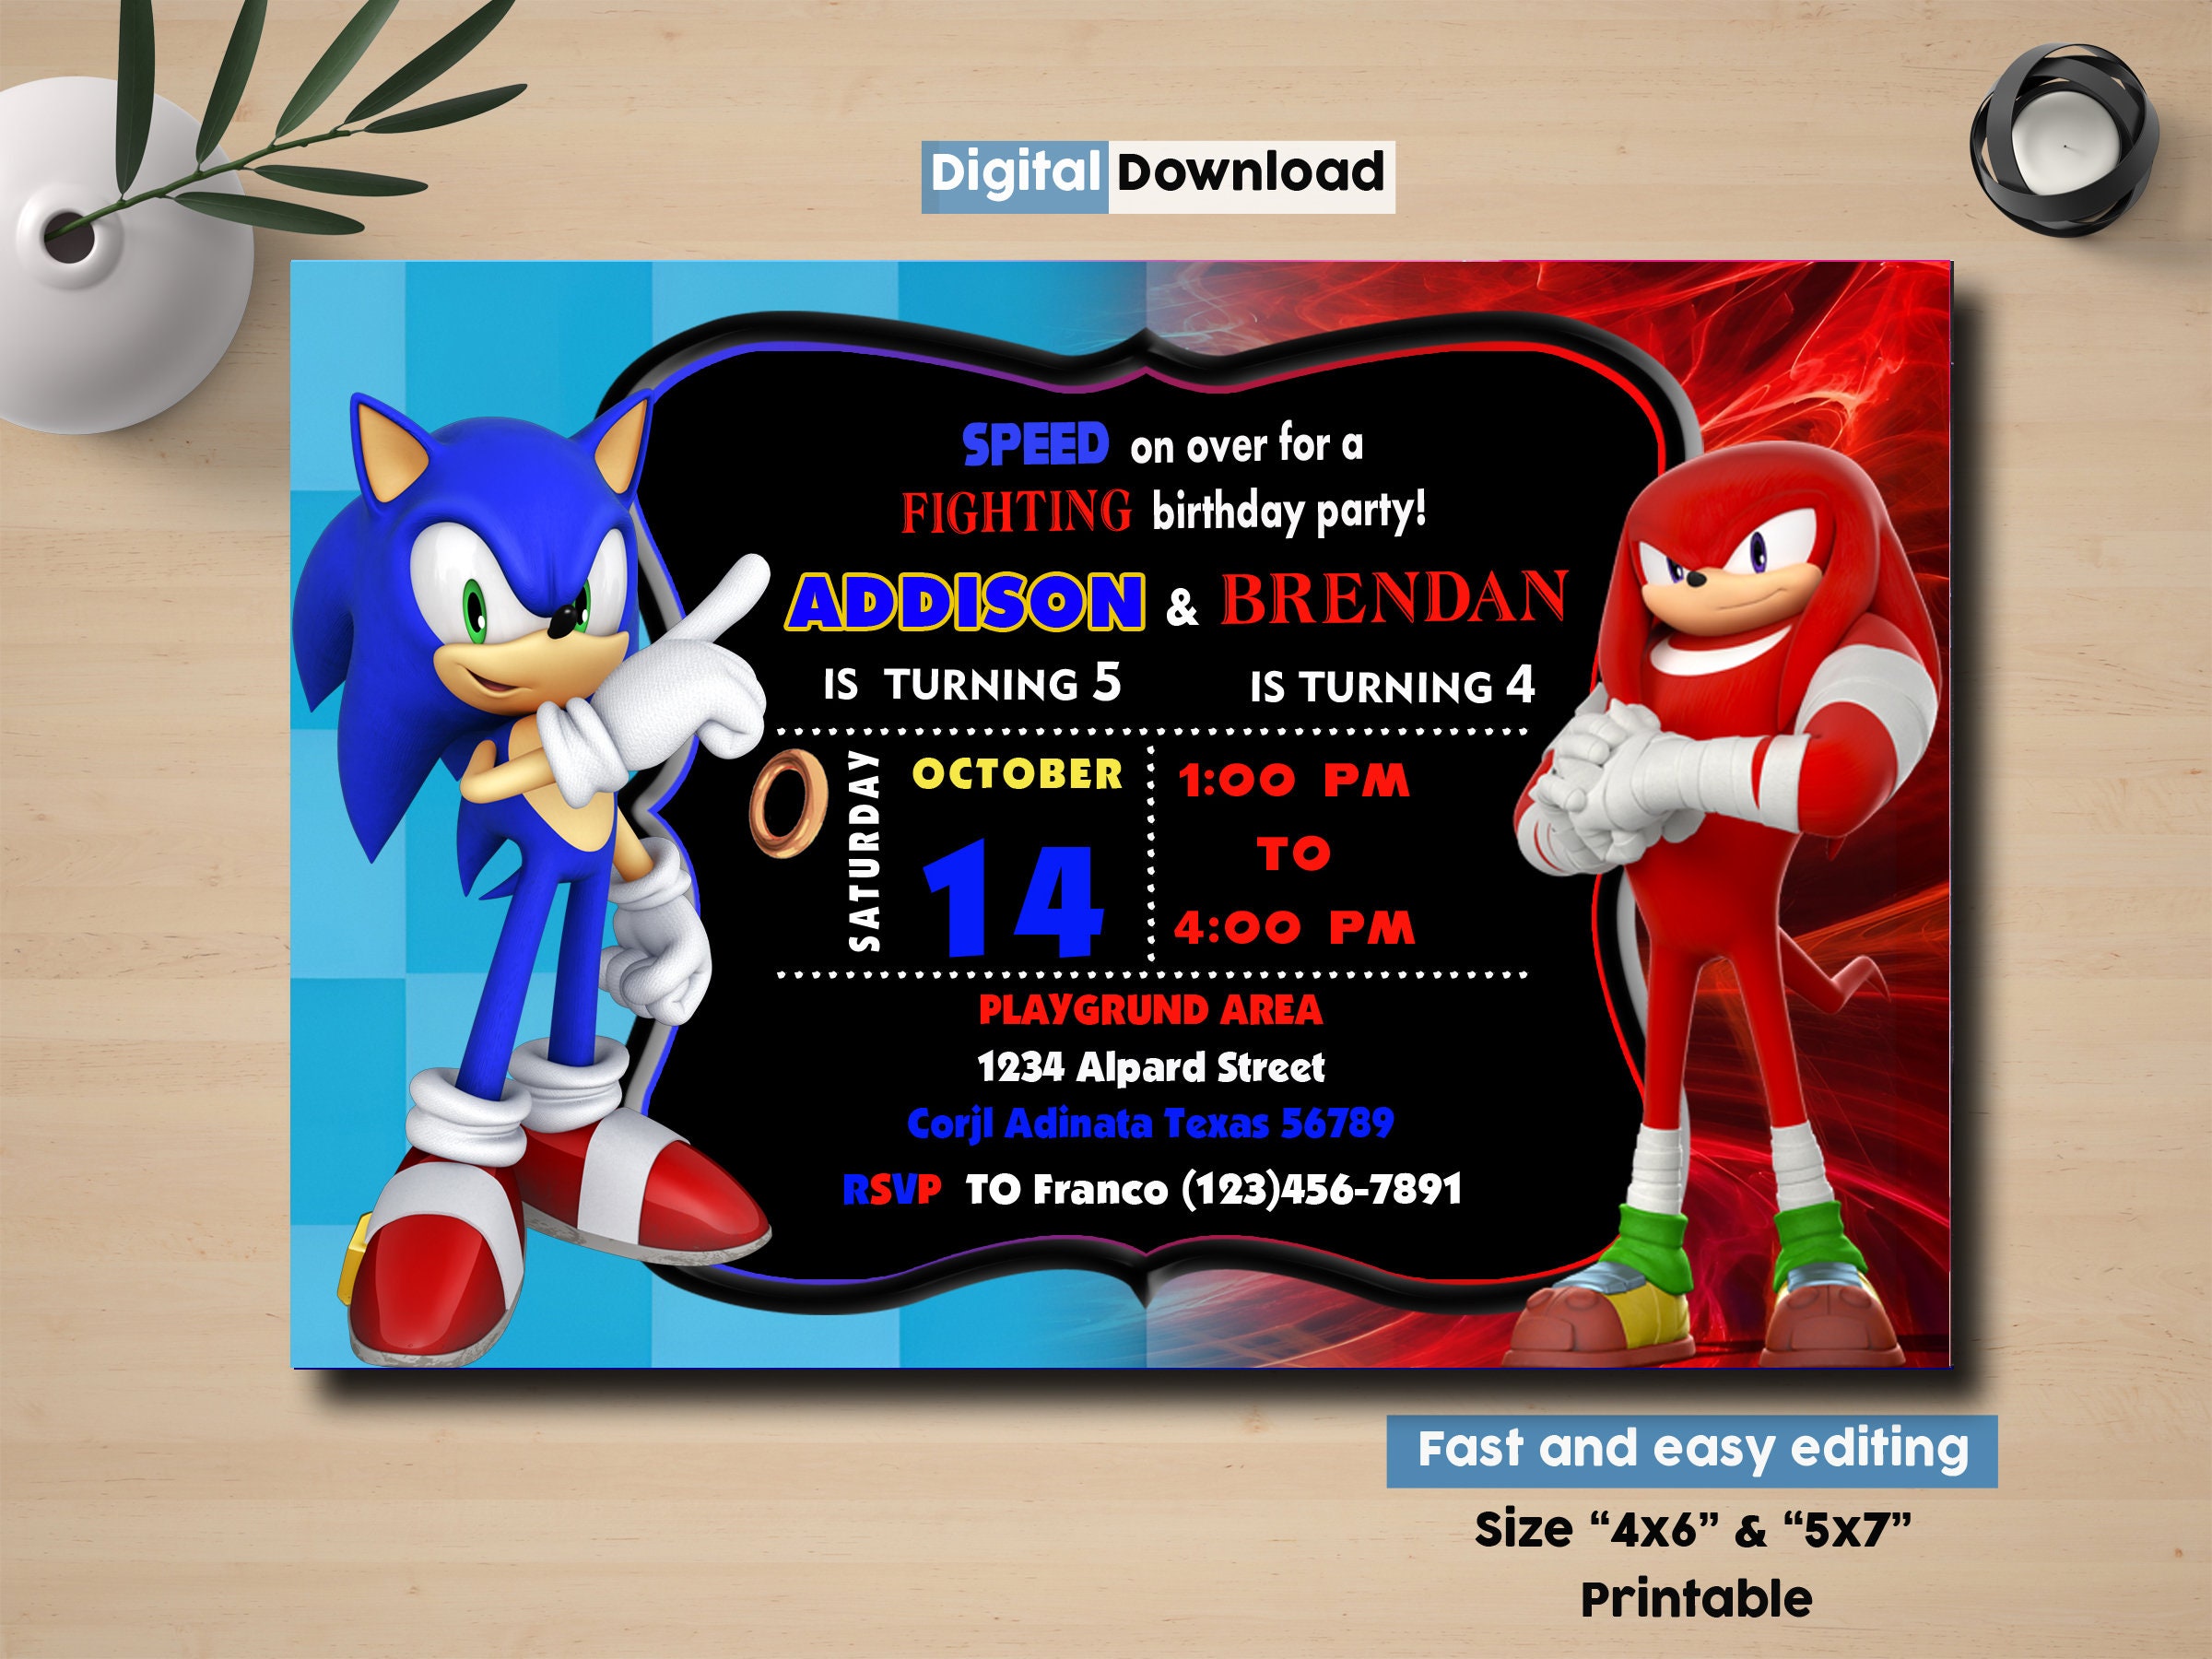 Convite Digital Sonic Desenho Tails Knuckles Envio Imediato